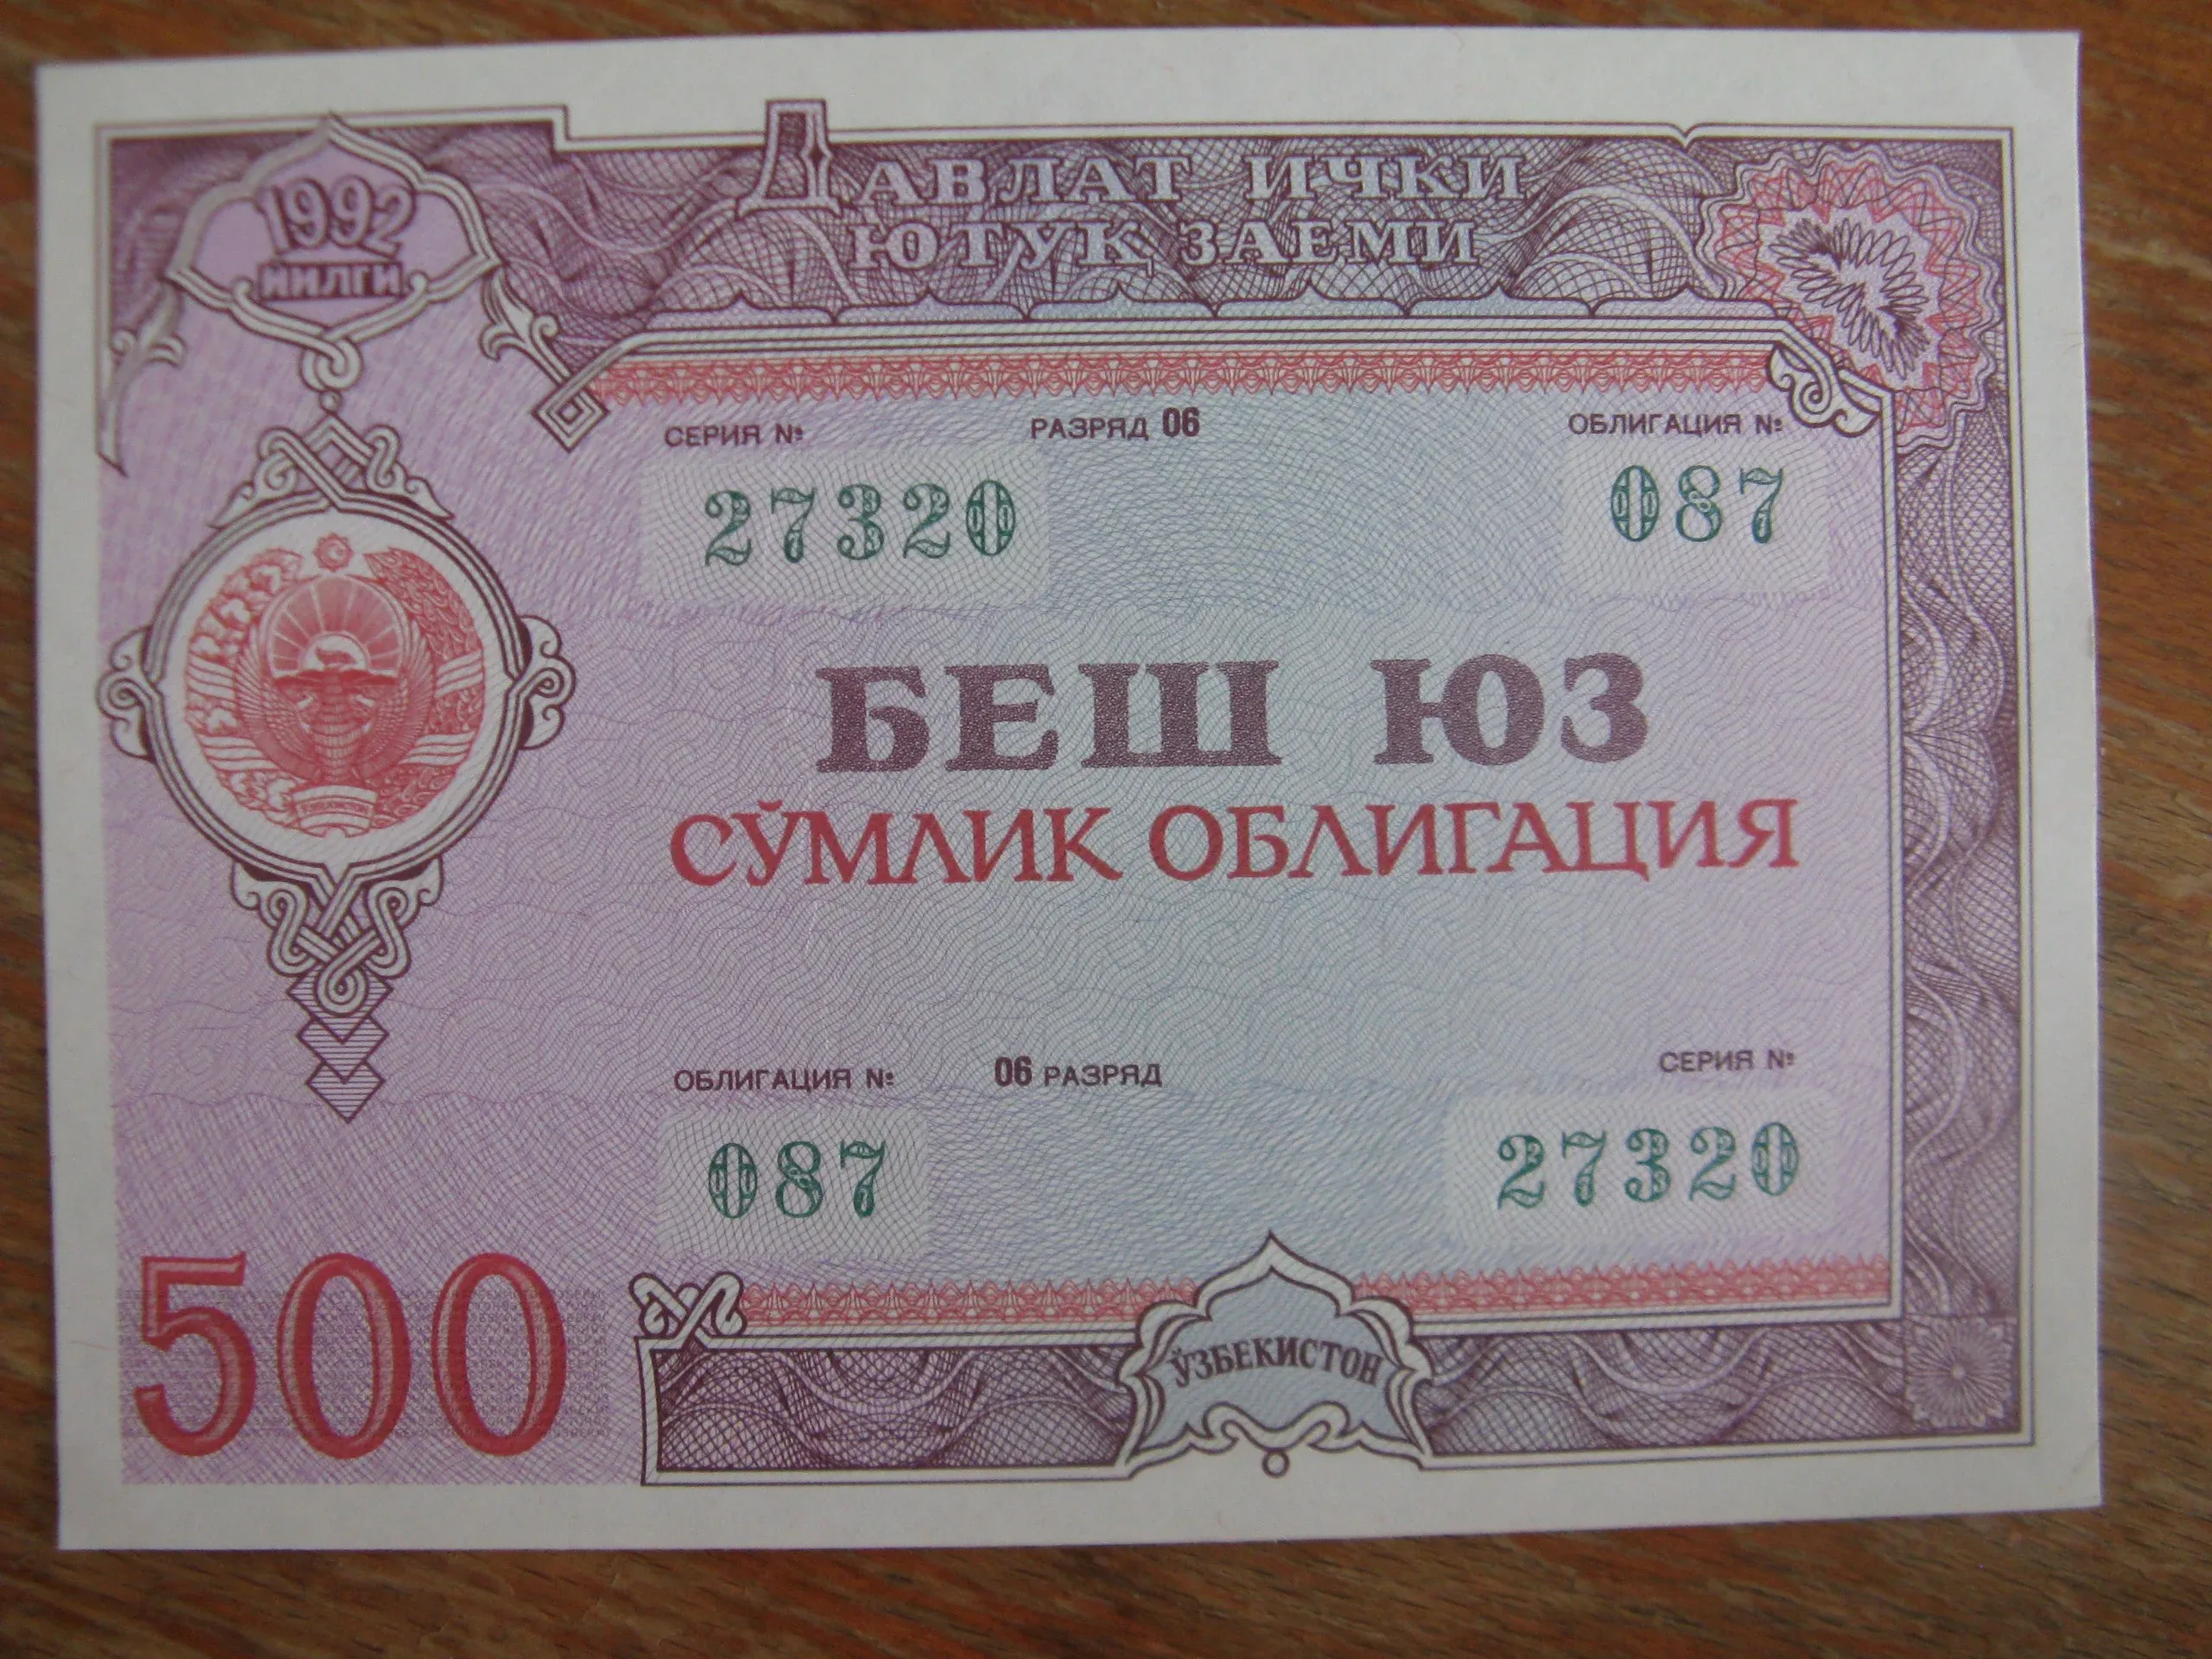 Сум 24. 500 Сум Узбекистан. Облигации государственного займа 1992 года. 500 Сум в рублях. Узбекистан 10 сум 1992 года.